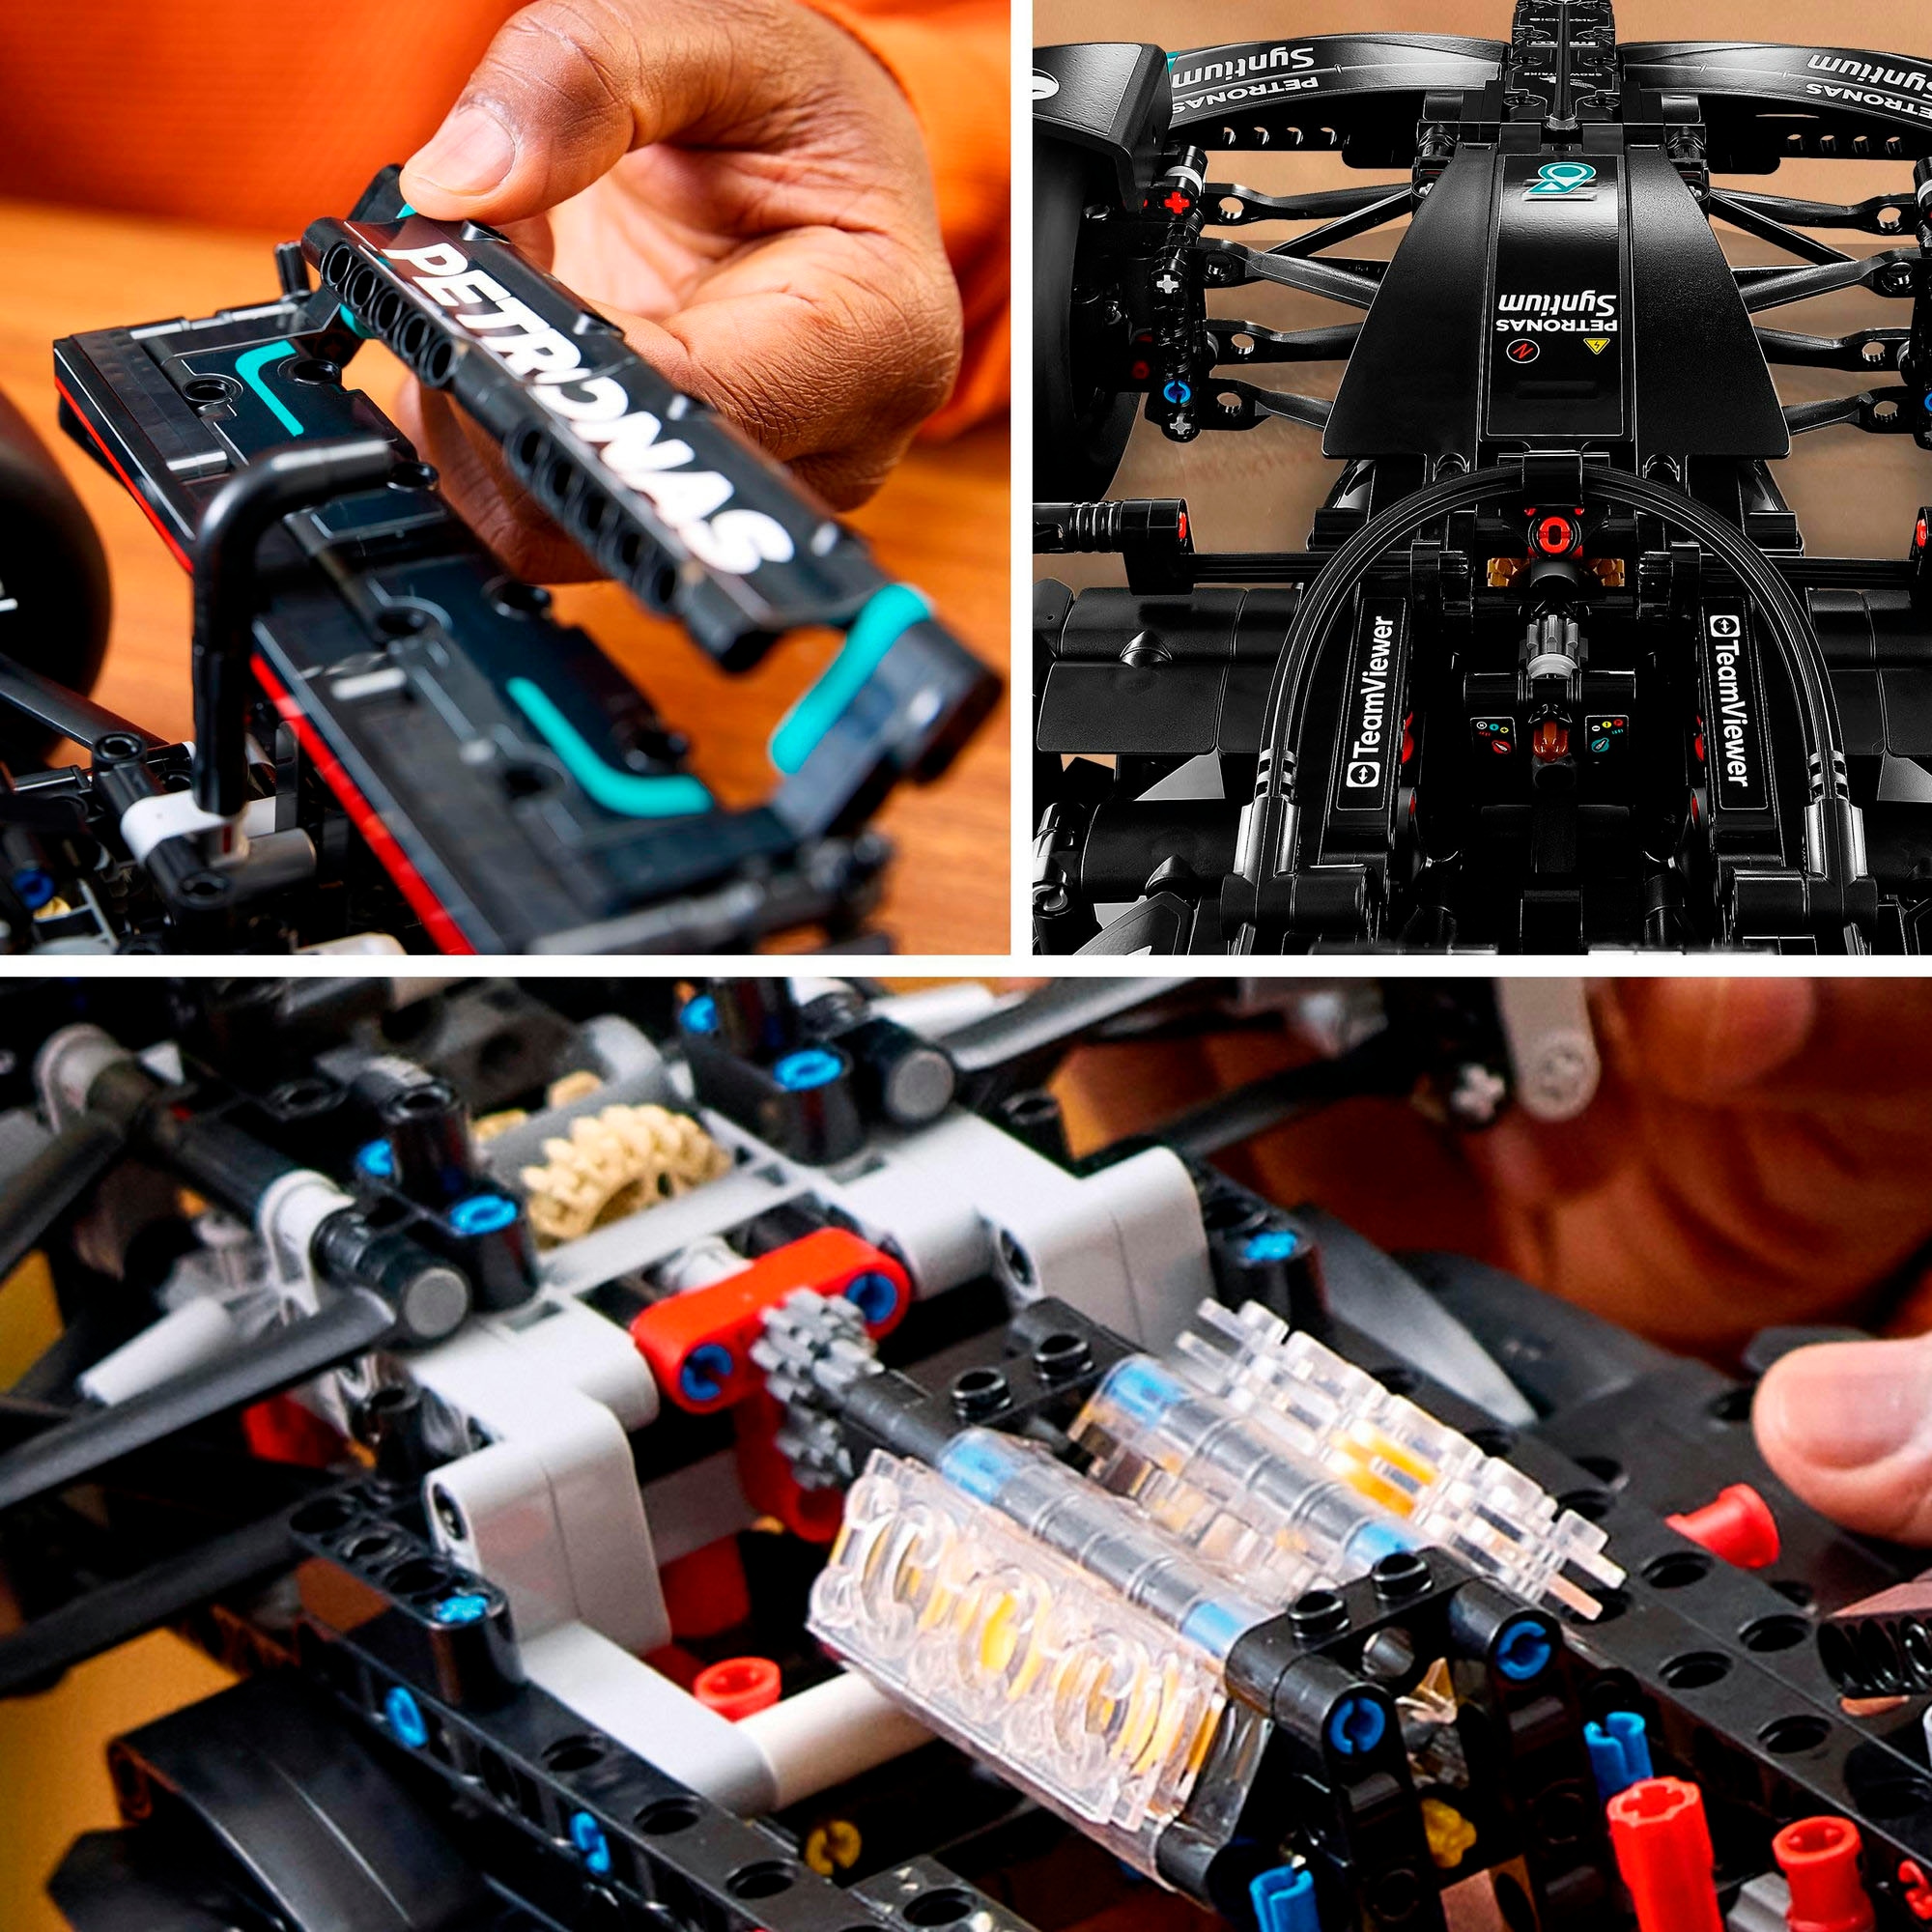 LEGO® Konstruktionsspielsteine »Mercedes-AMG F1 W14 E Performance (42171), LEGO® Technic«, (1642 St.), Made in Europe